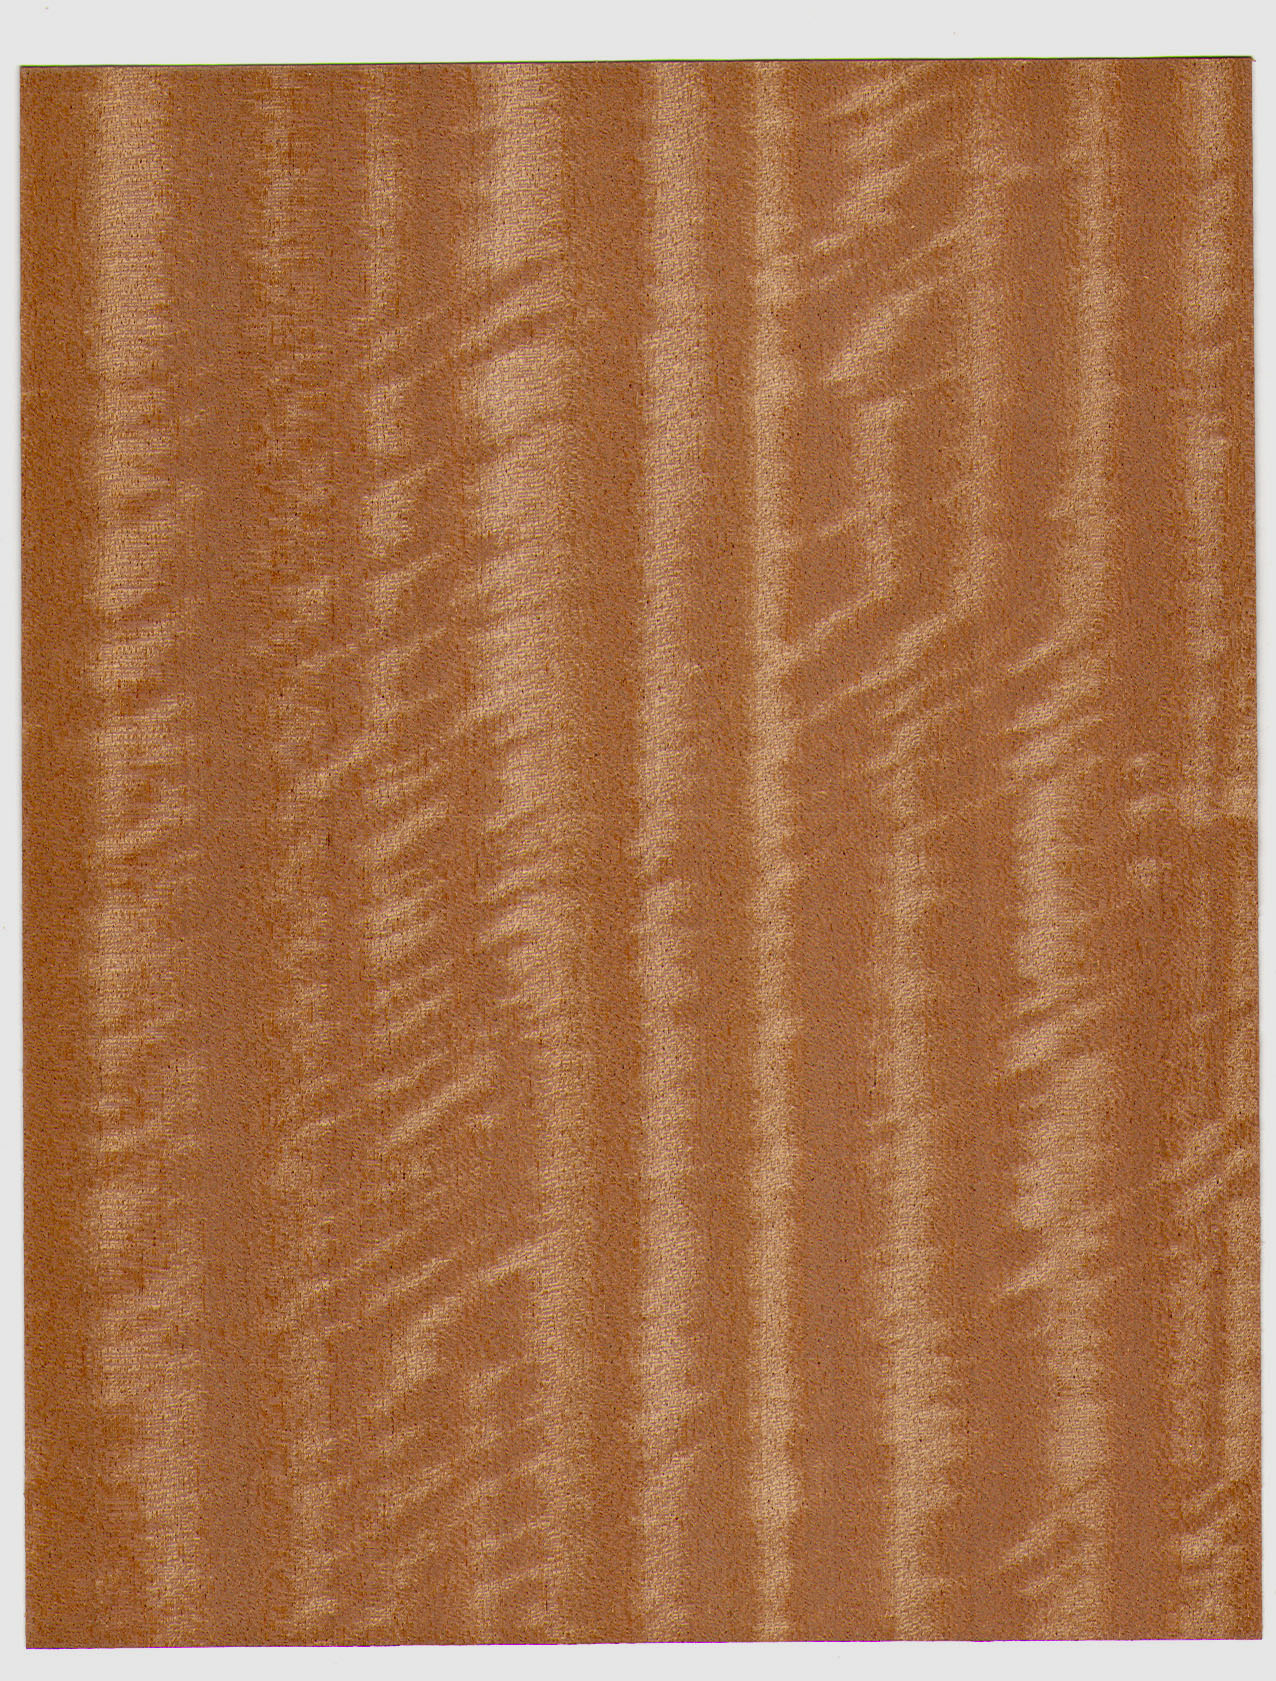 wood Texture, laminate, download photo background, wood background texture image